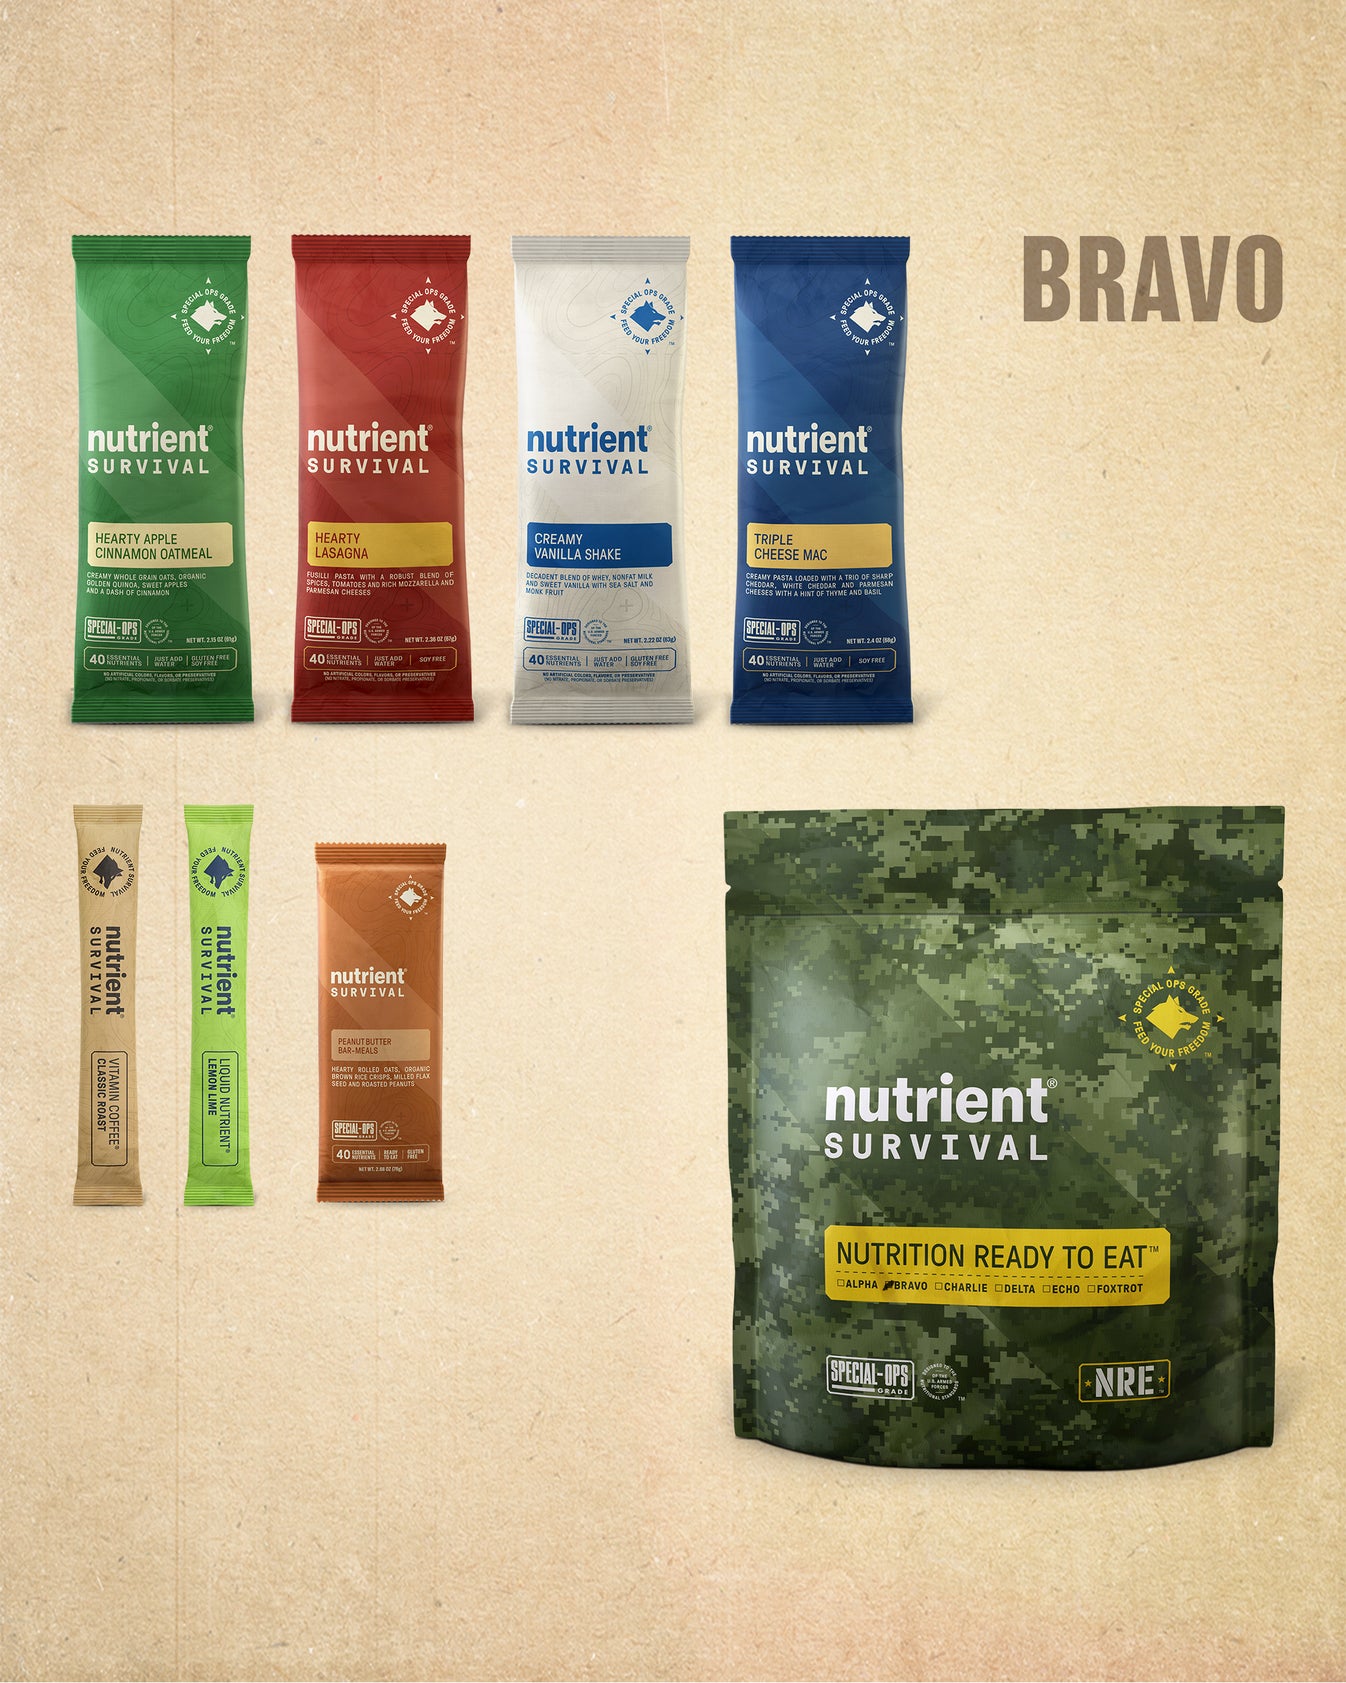 NRE | Nutrition Ready to Eat - Bravo